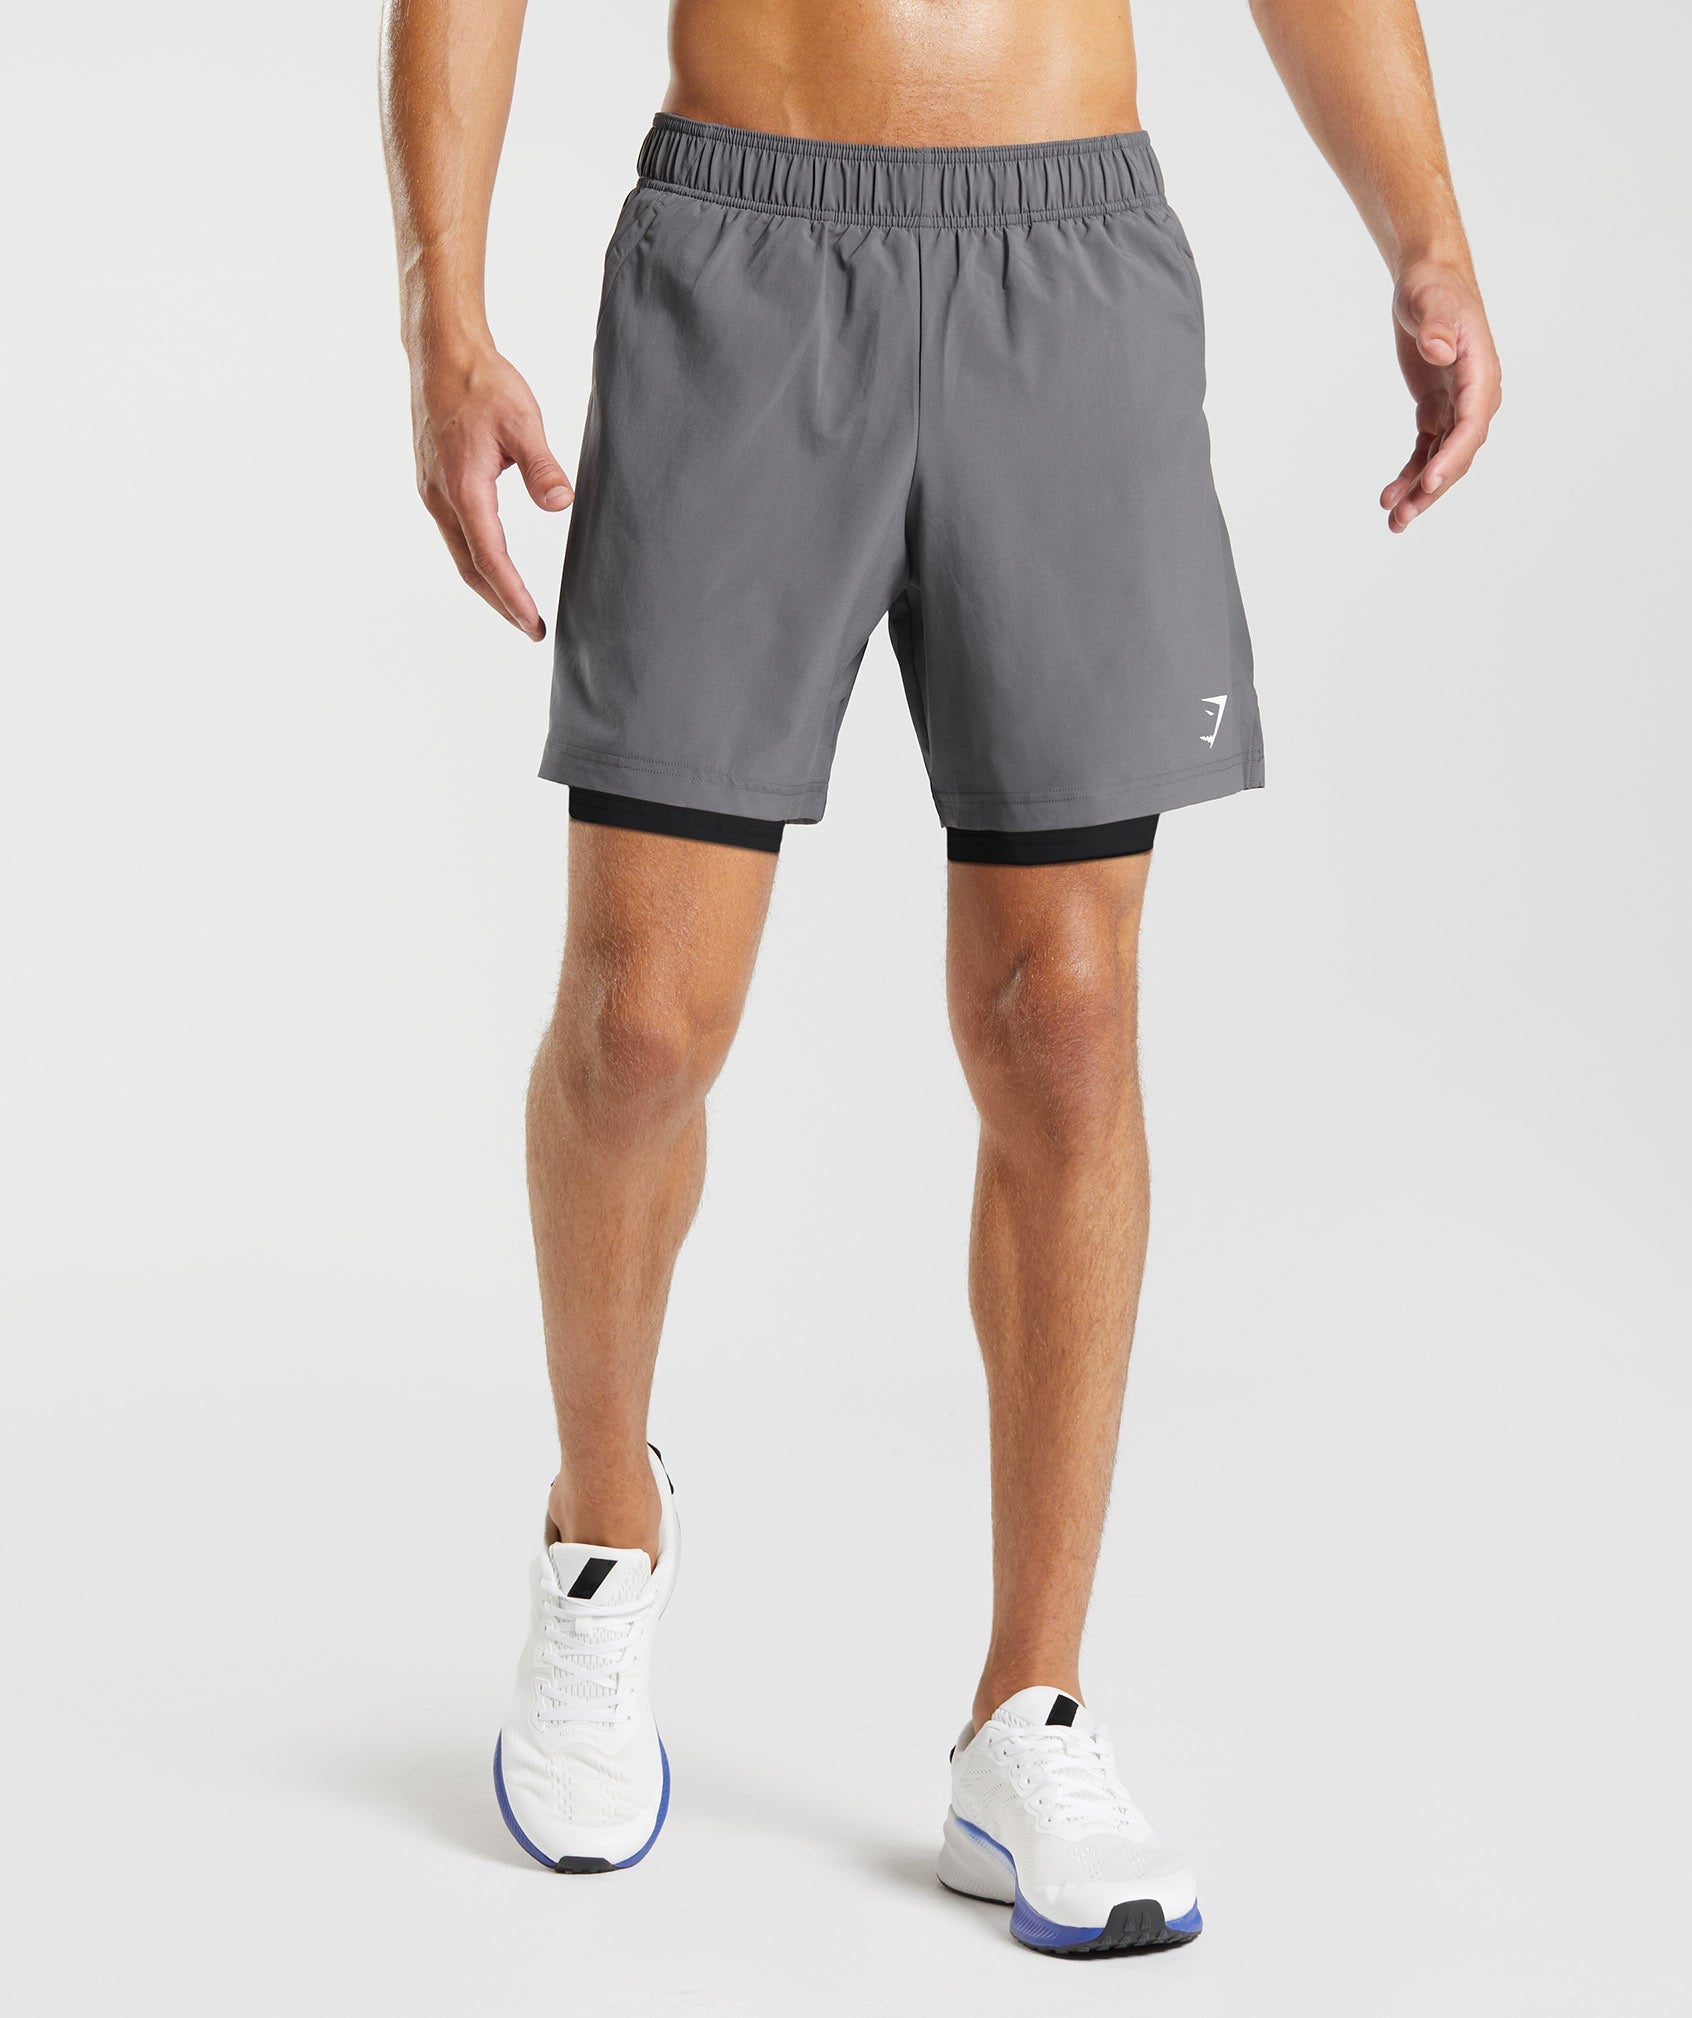 Gymshark Sport 7 2 In 1 Shorts - Silhouette Grey/Black